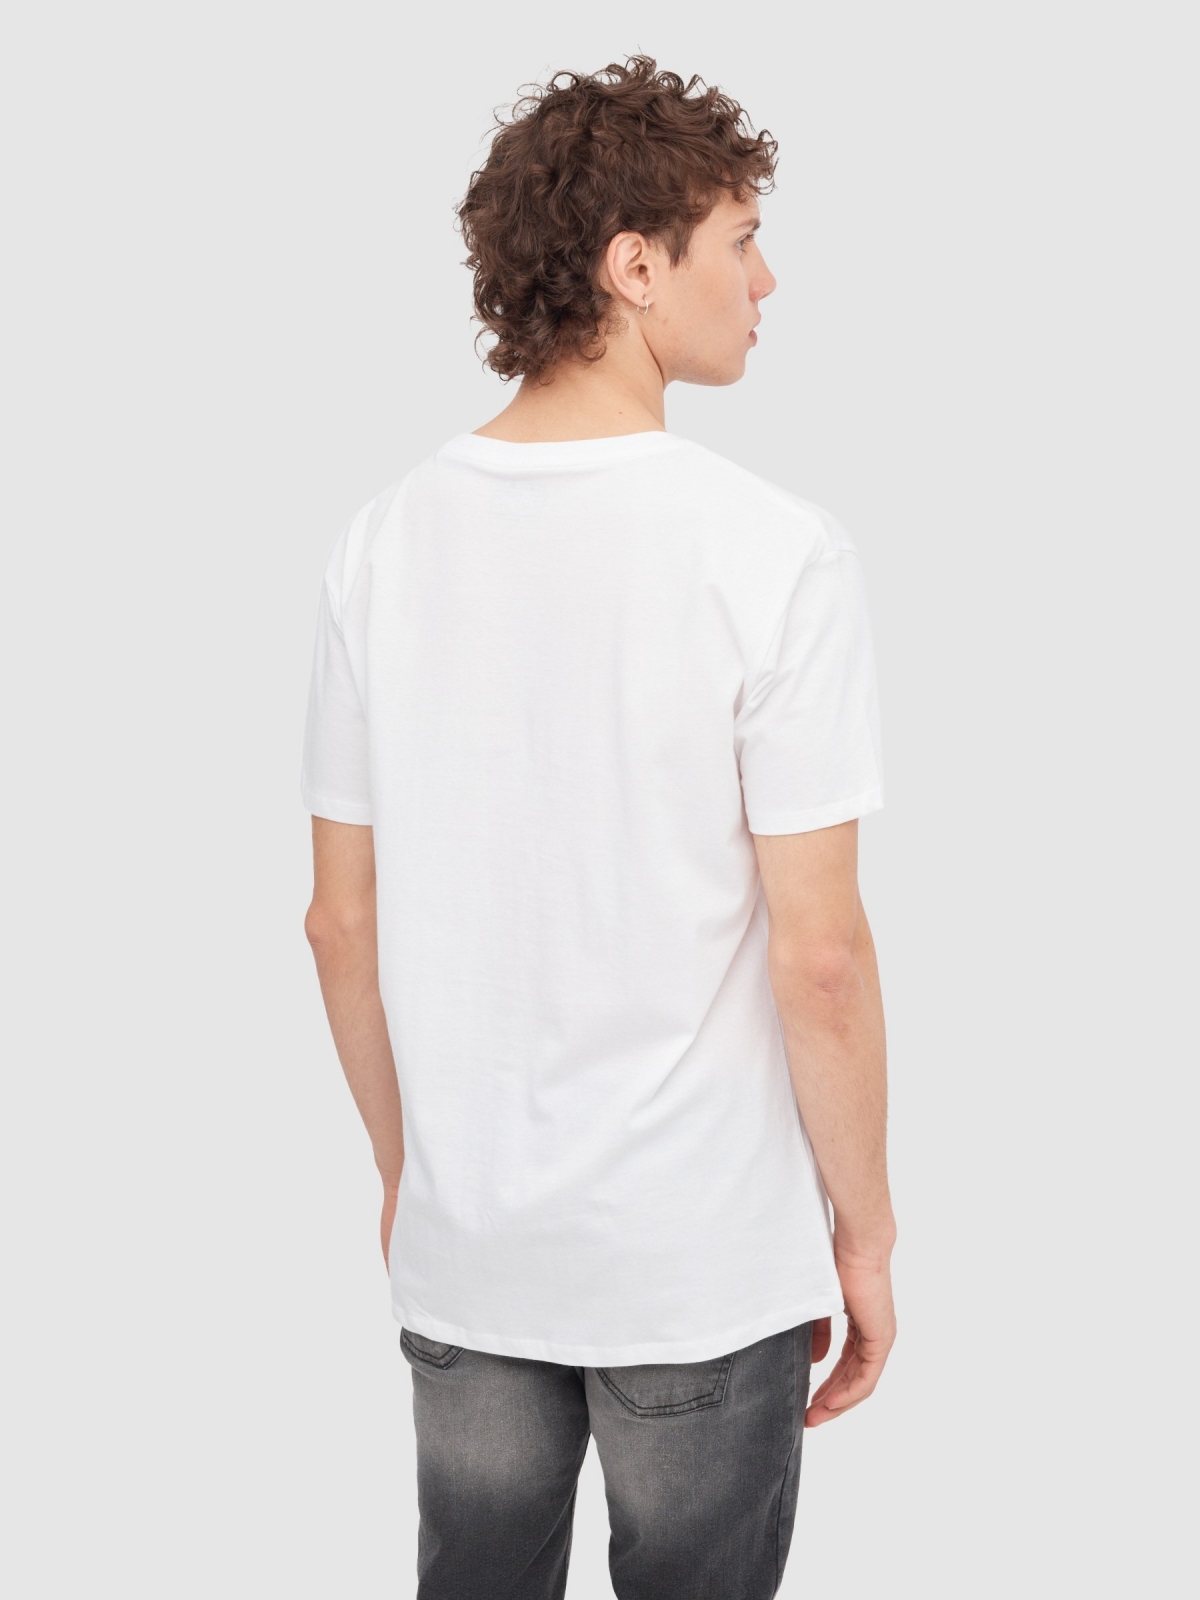 Camiseta Bob Esponja blanco vista media trasera